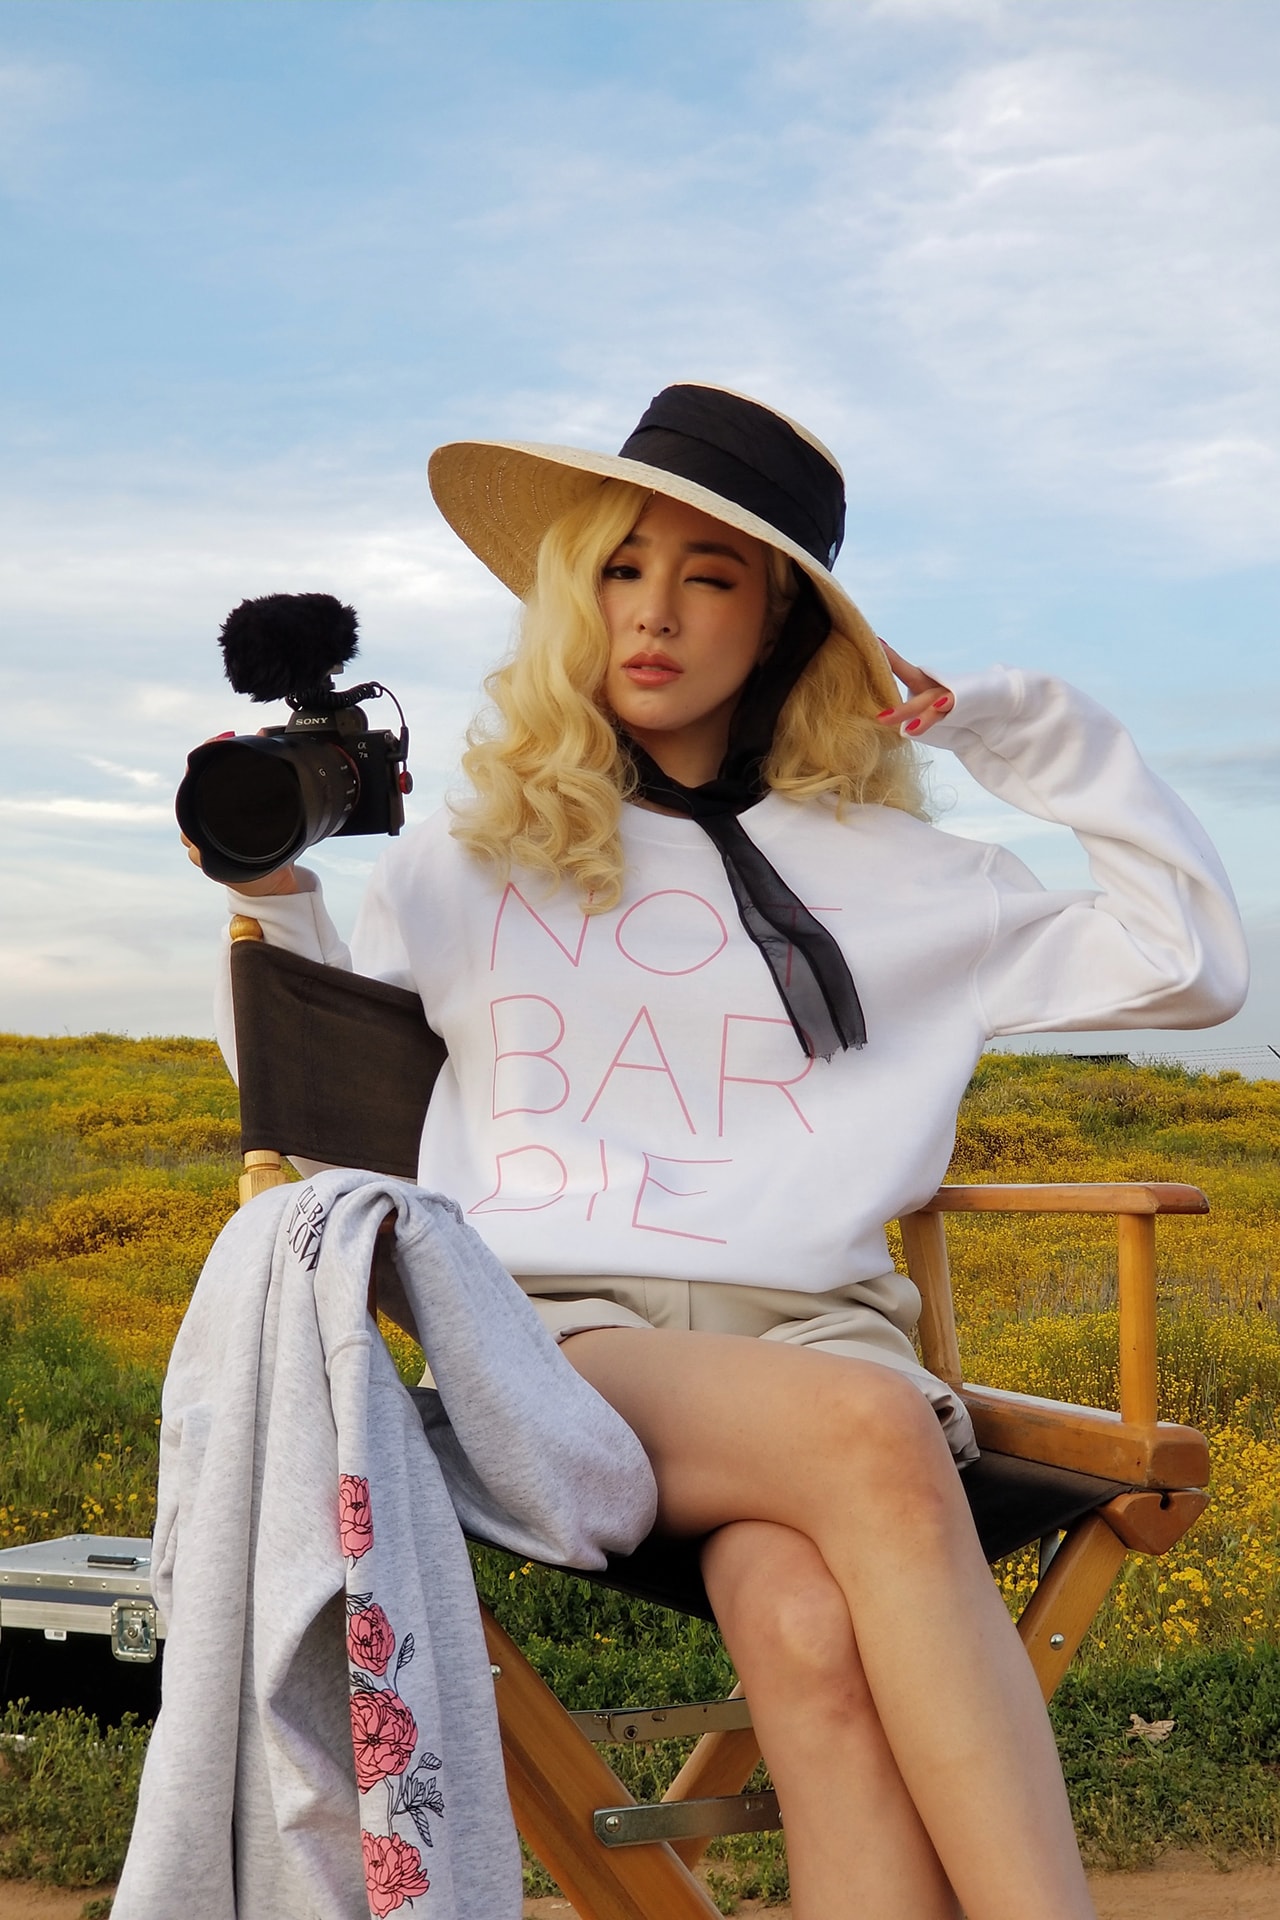 Tiffany Young K-pop Star Artist Singer Girls' Generation Not Barbie Merch T-Shirt Blonde Hair